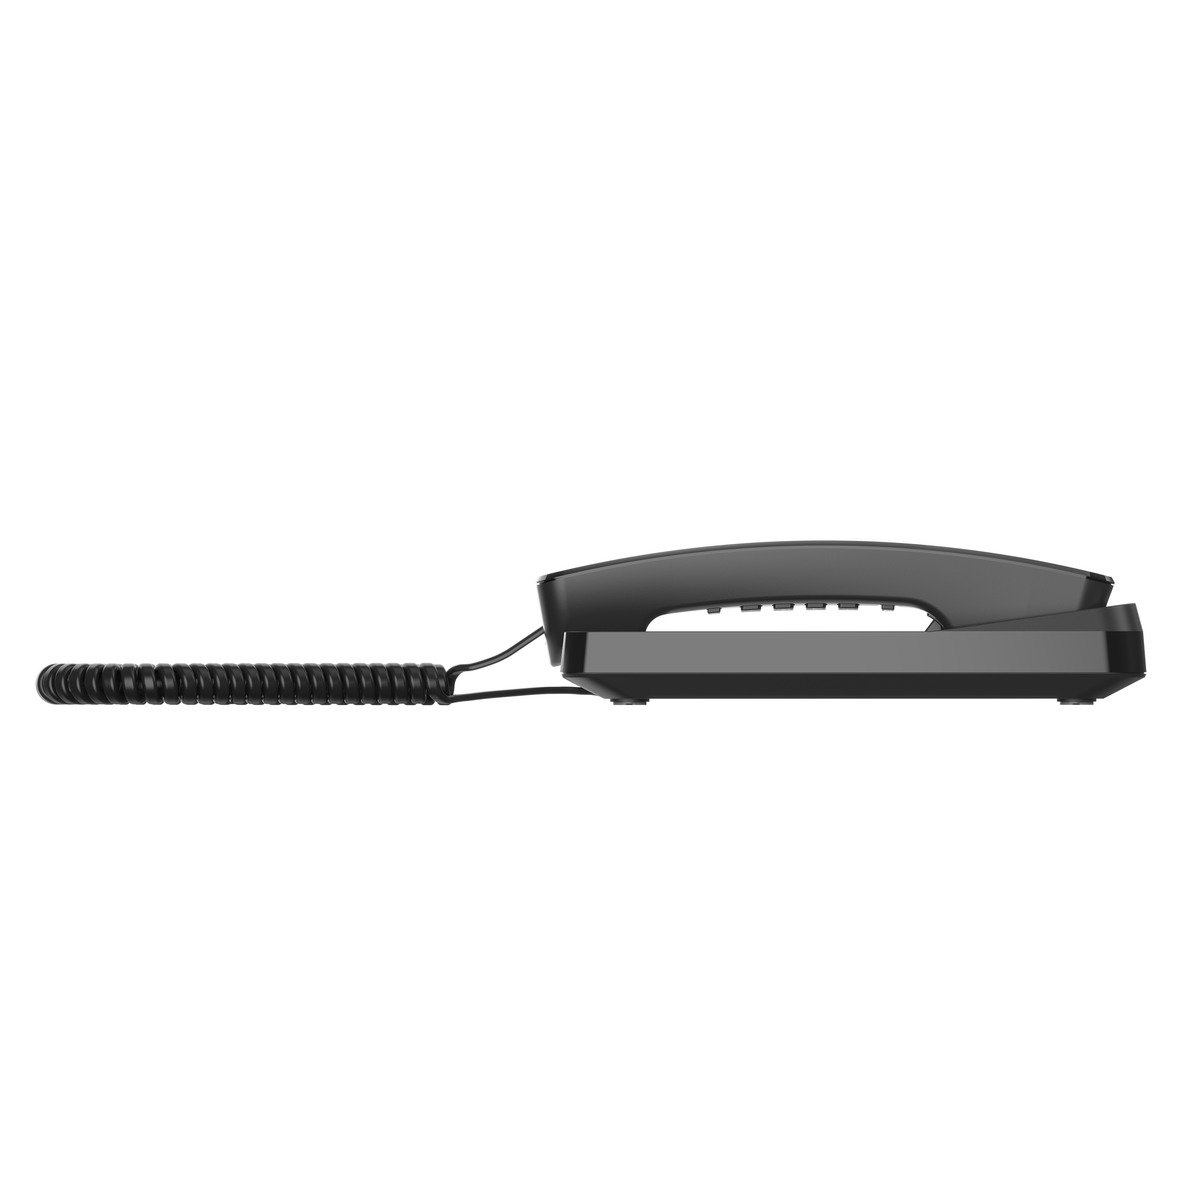 Besserung Buy Gigaset DESK 200 corded phone